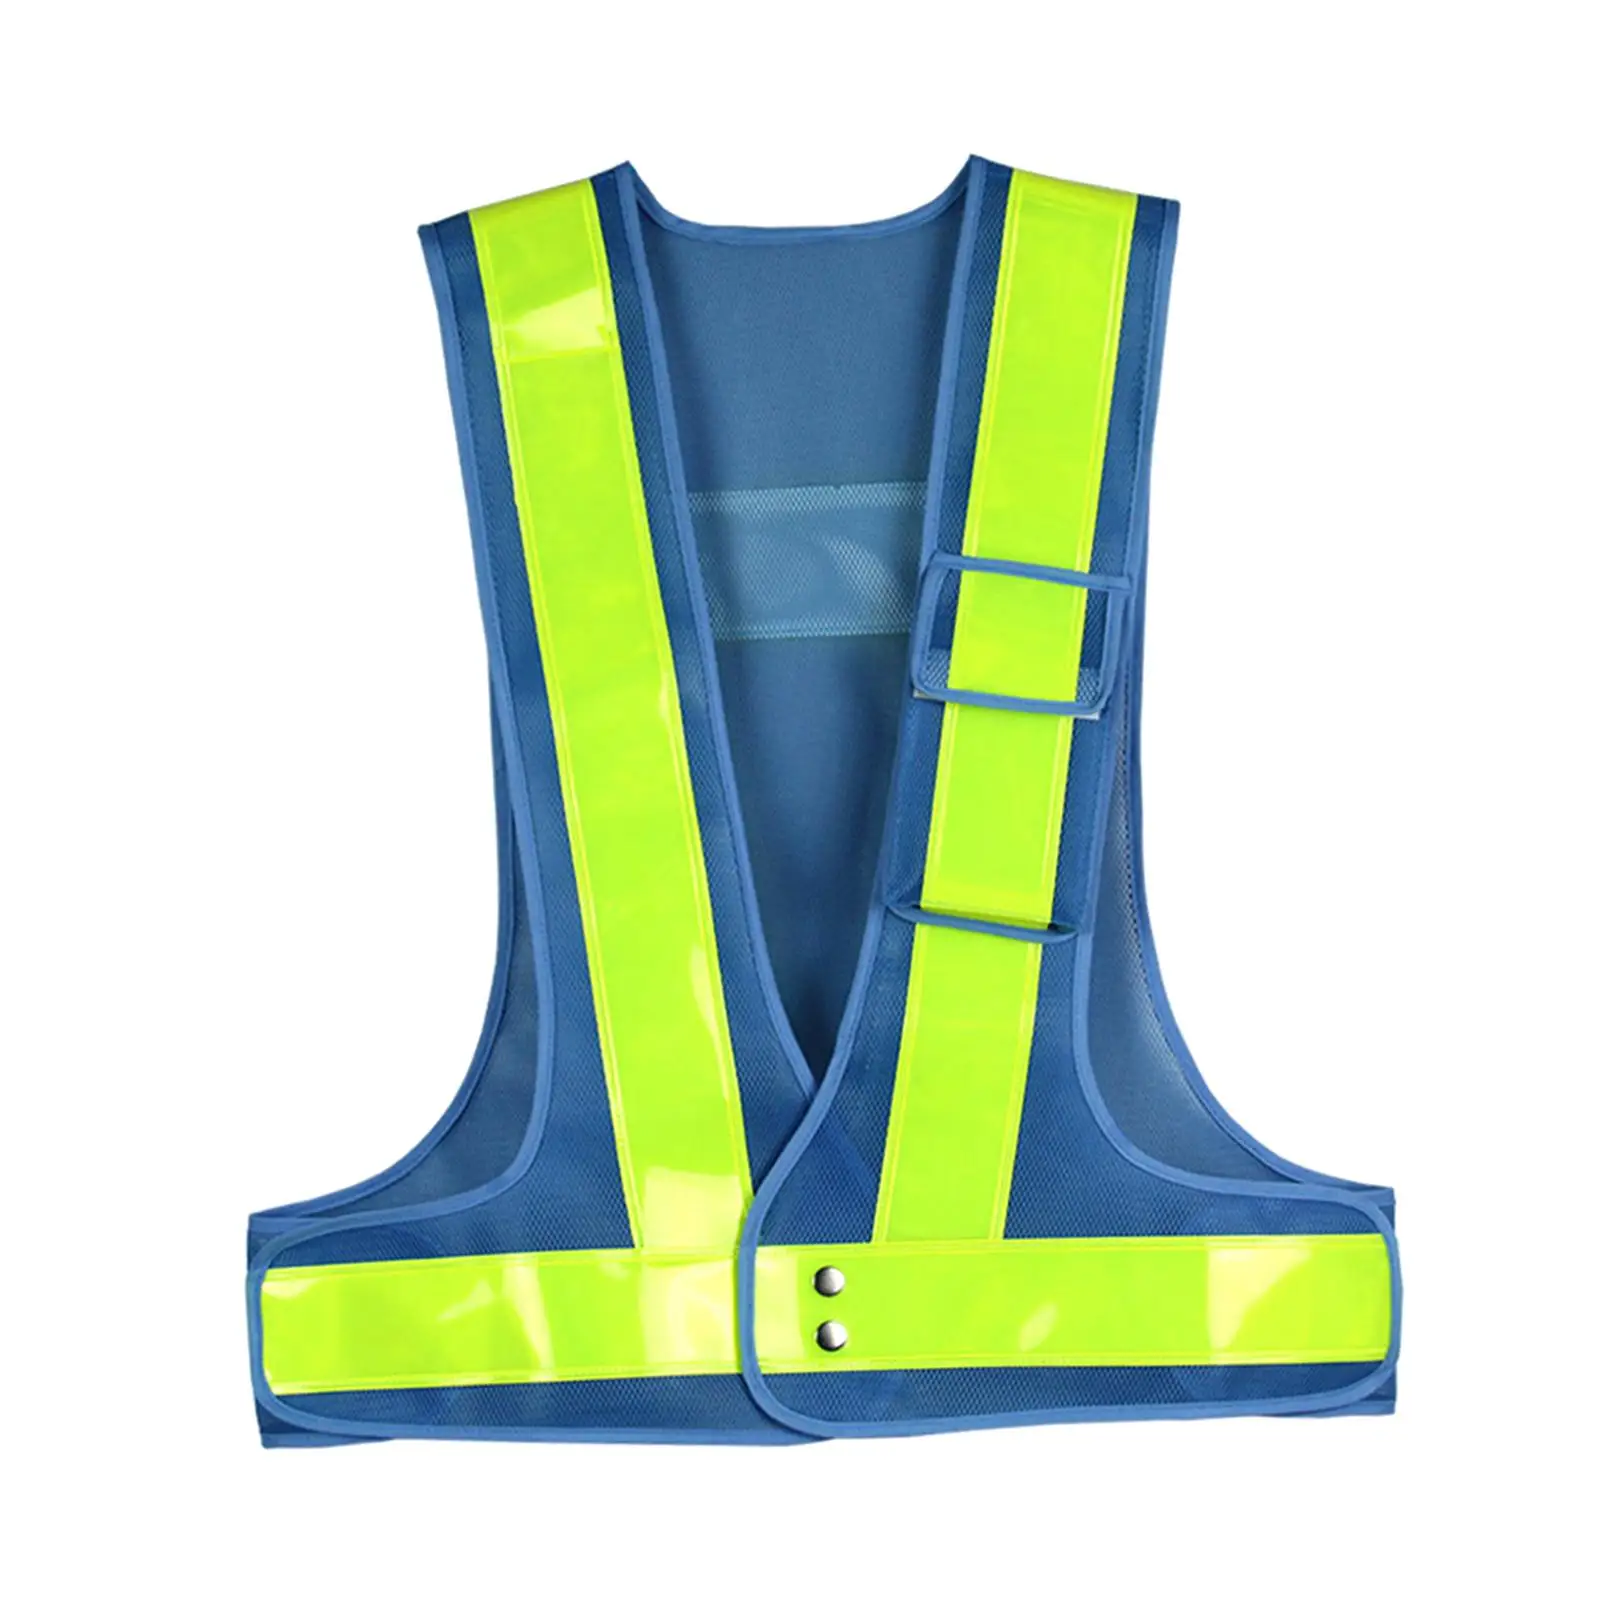 High Visibility Reflective Safety Vest Running Reflective Vest Gear for Volunteer Emergency Traffic Work Walking Night Running